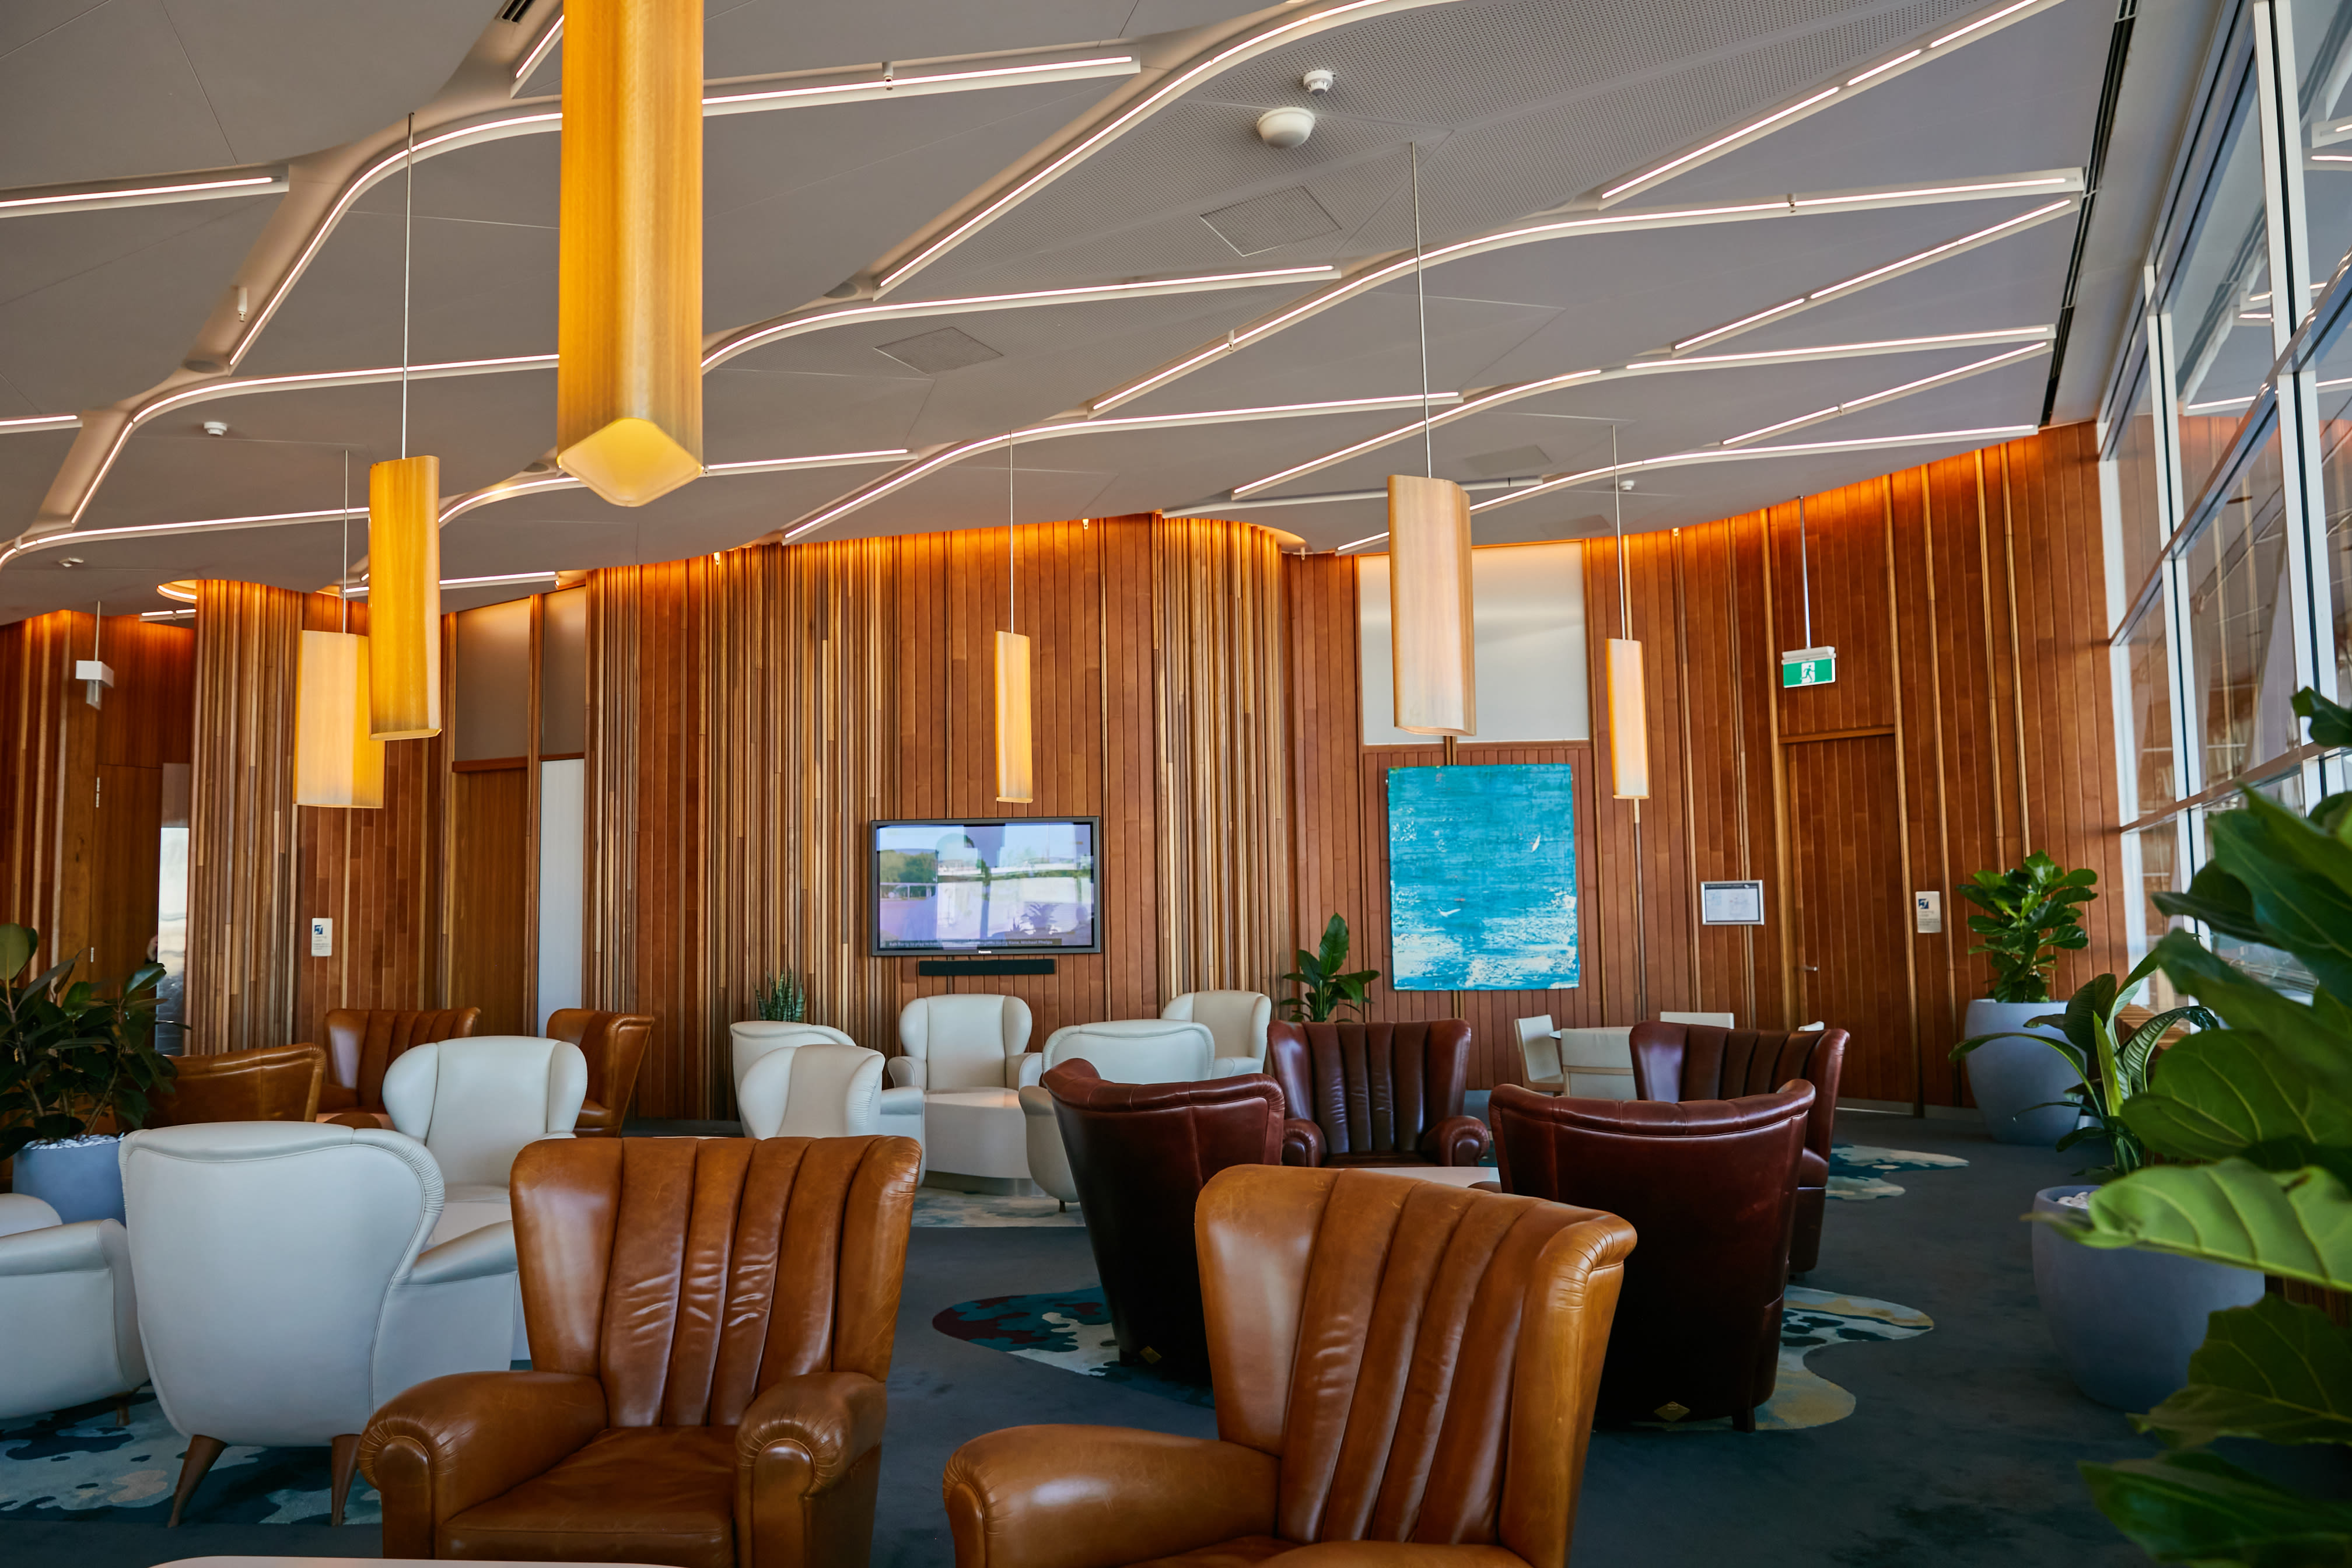 Virgin Australian's new Beyond airport lounge